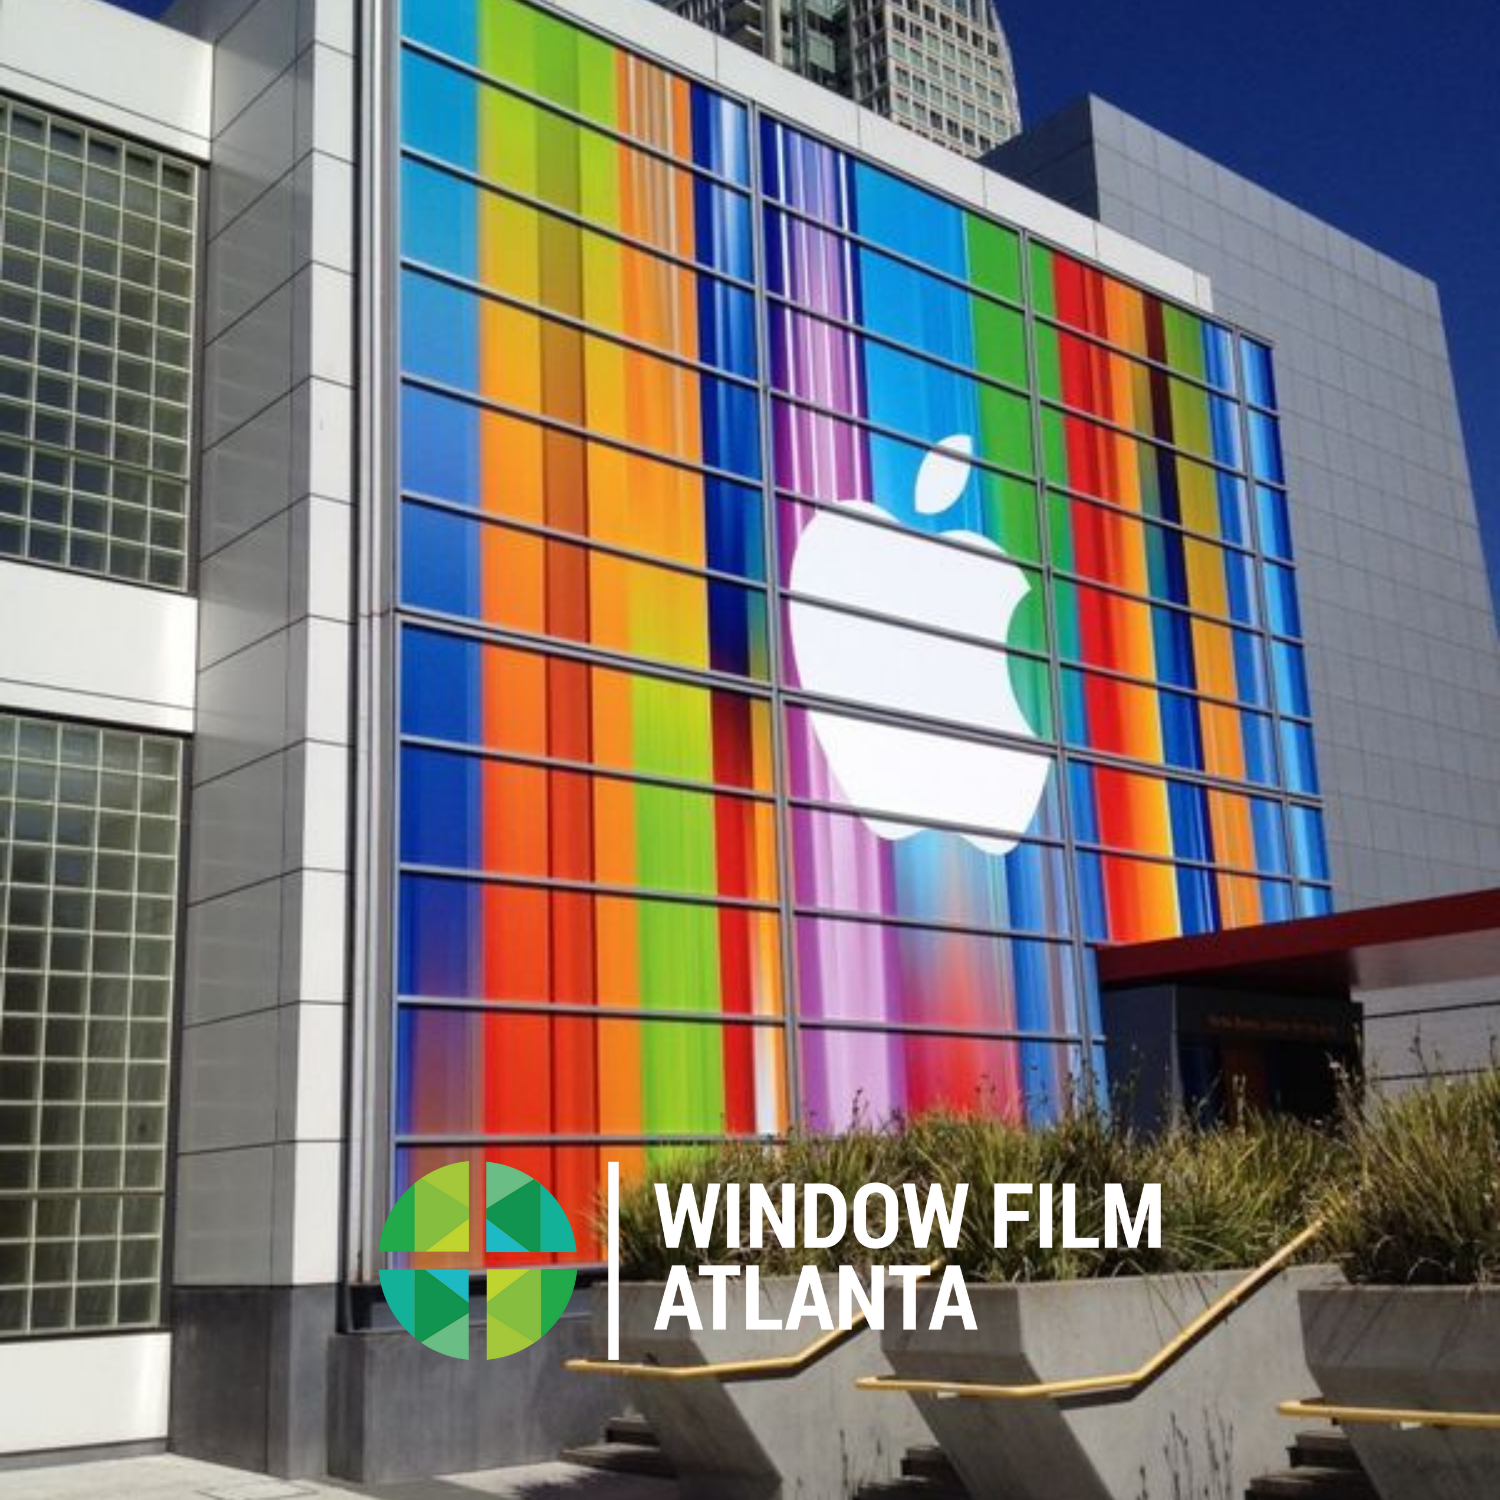 exterior building wrap window film atlanta